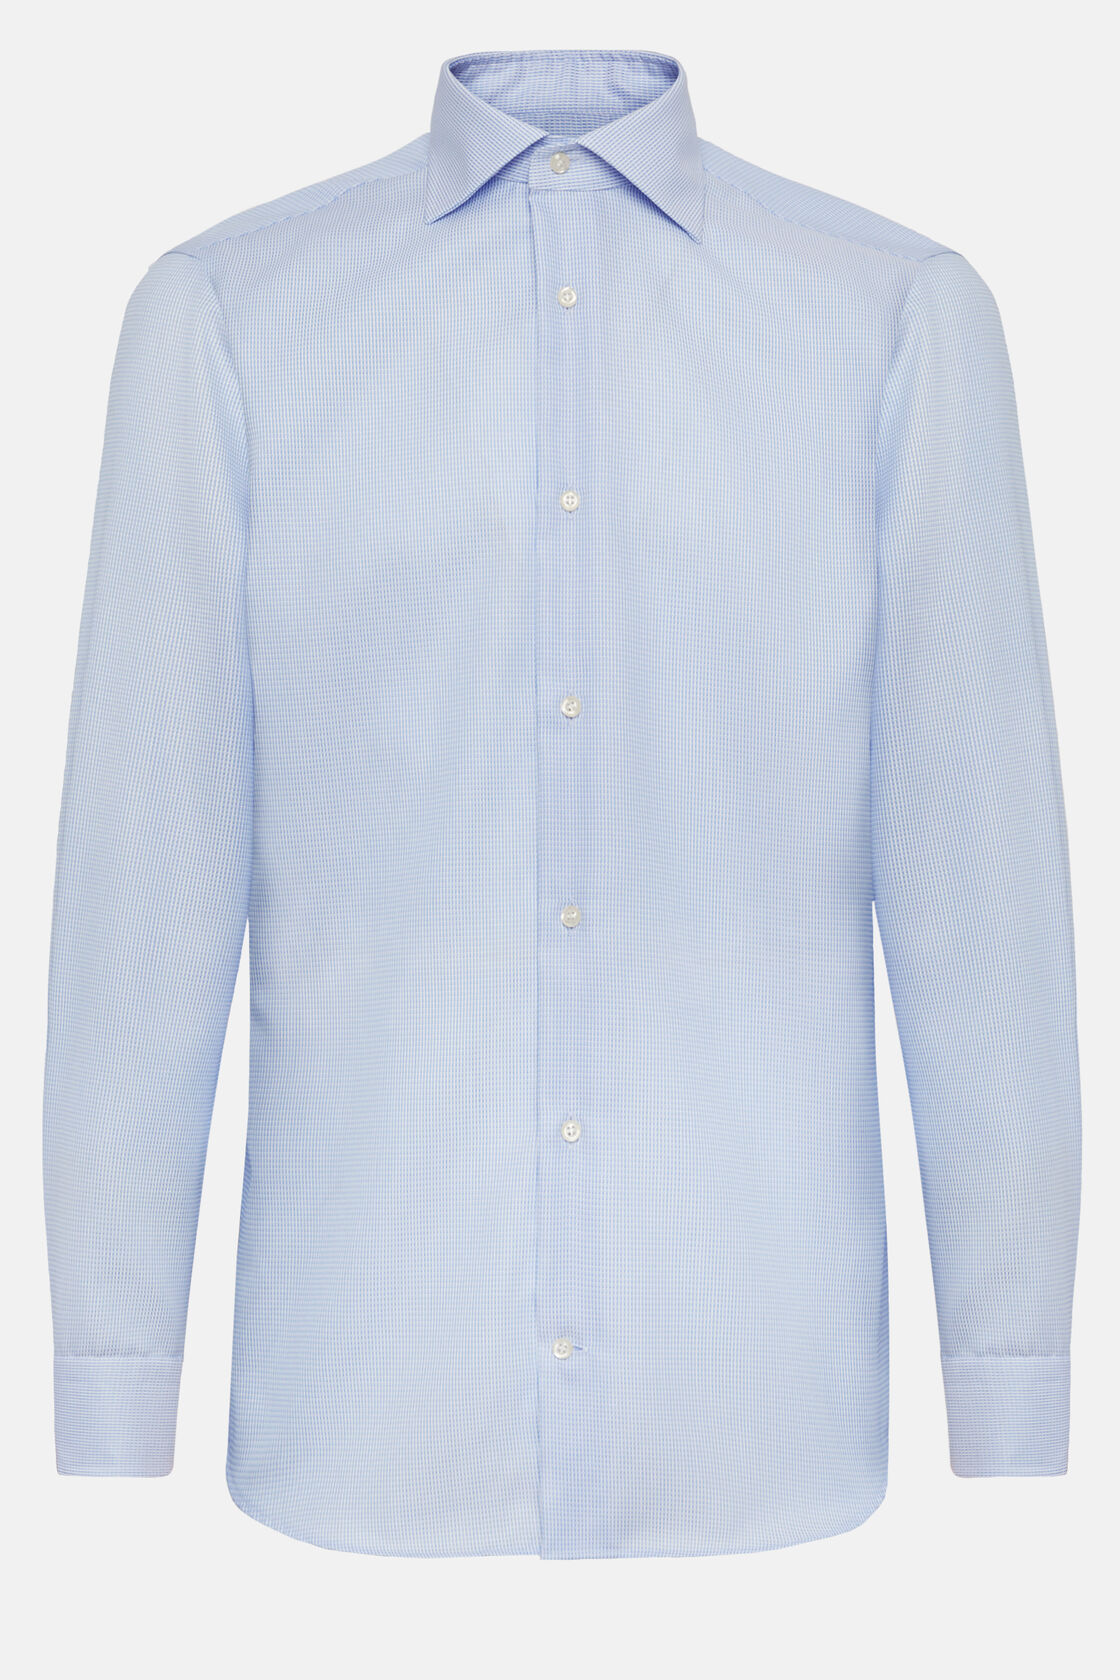 Slim Fit Sky Blue Dobby Cotton Shirt, Light Blue, hi-res